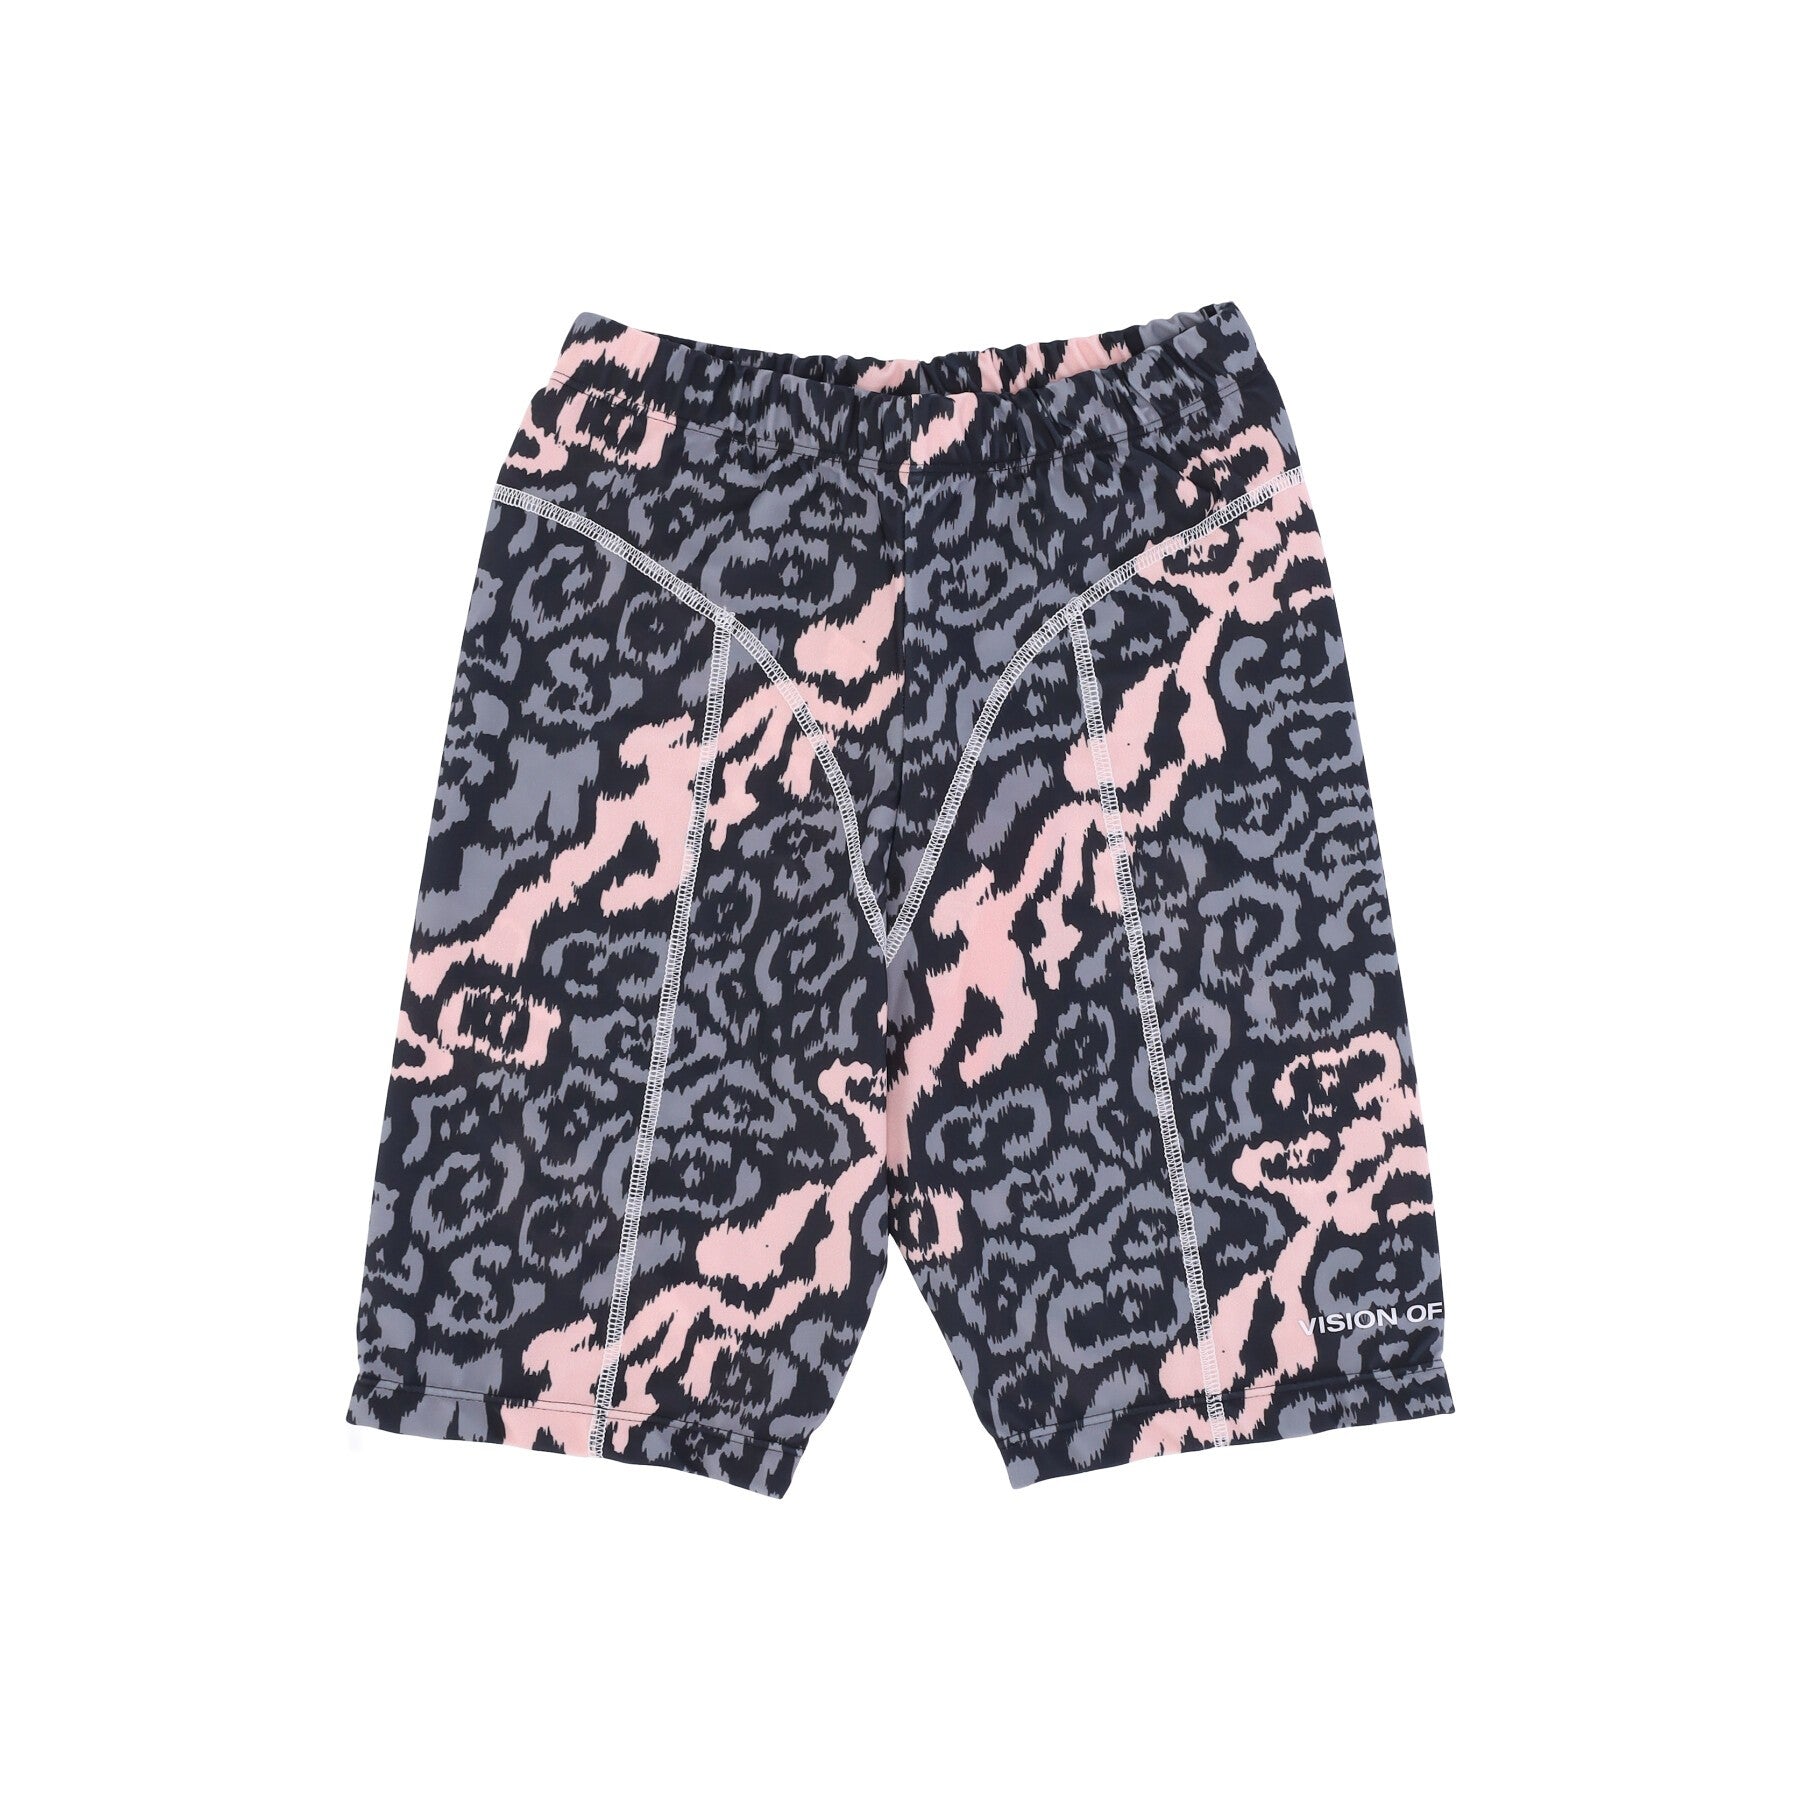 Vision Of Super, Pantaloncino Ciclista Donna Allover Leopard Leggings, Pink/grey